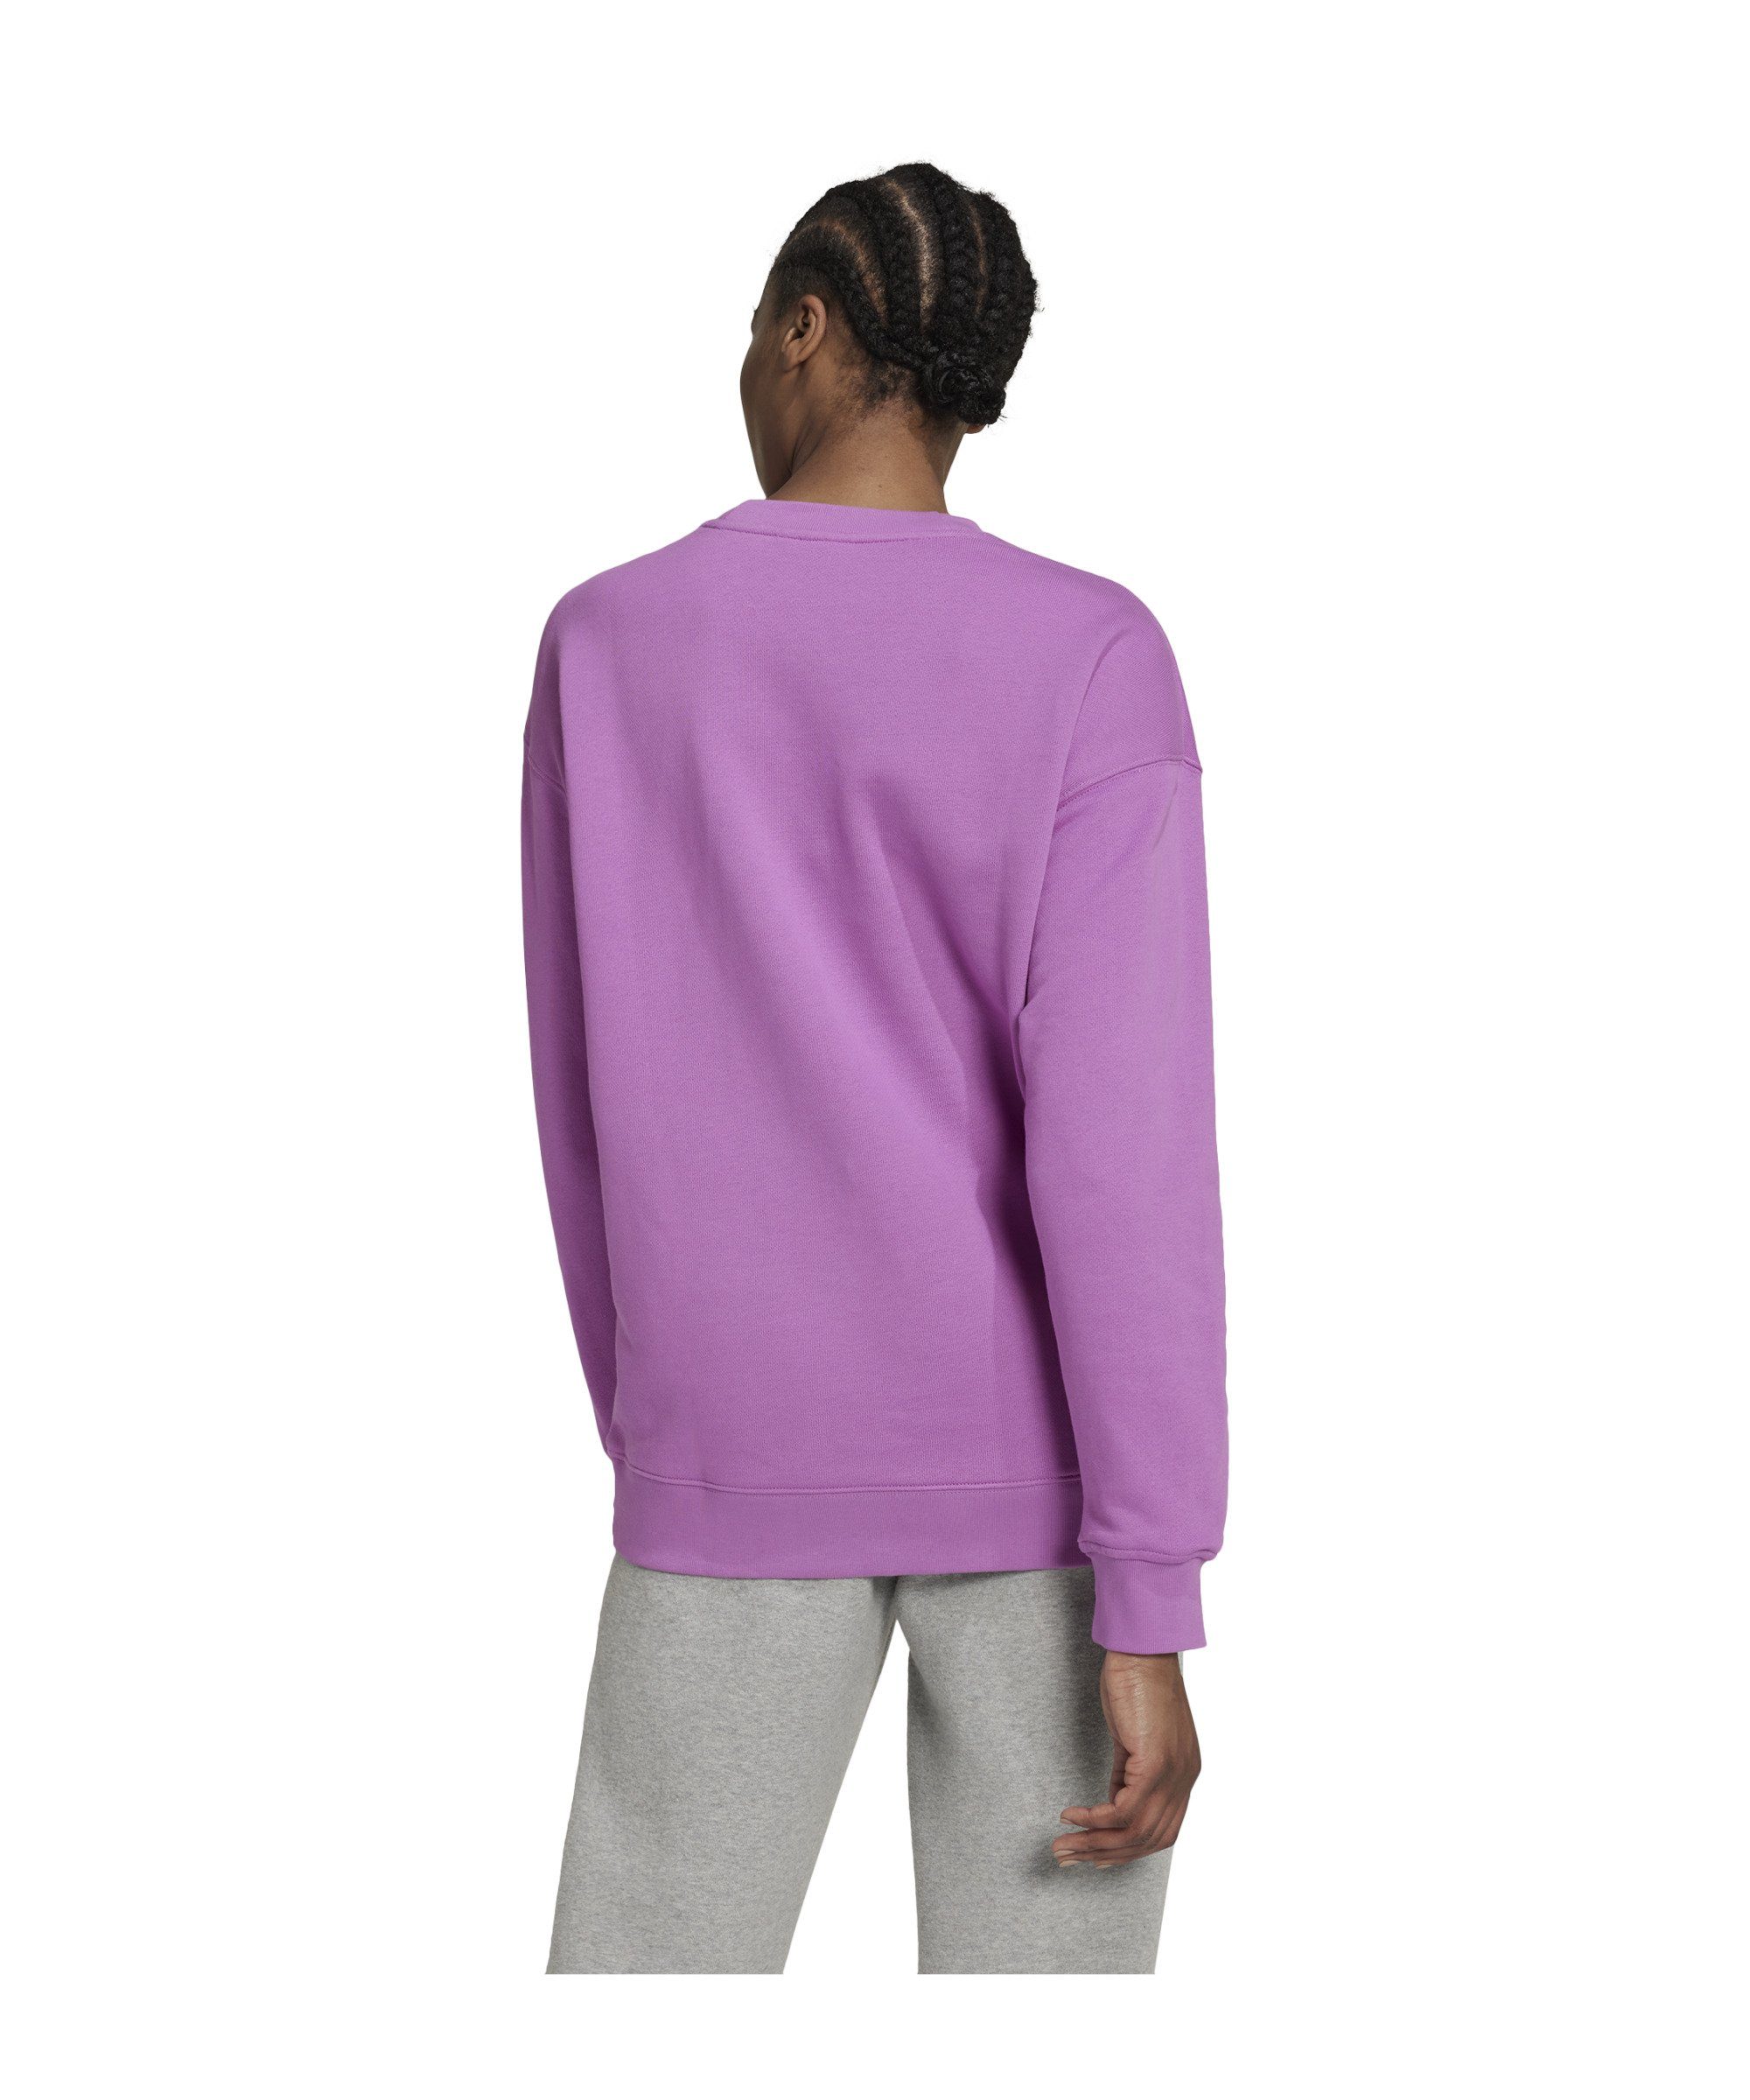 adidas Originals Sweater lila Sweatshirt Trefoil Damen